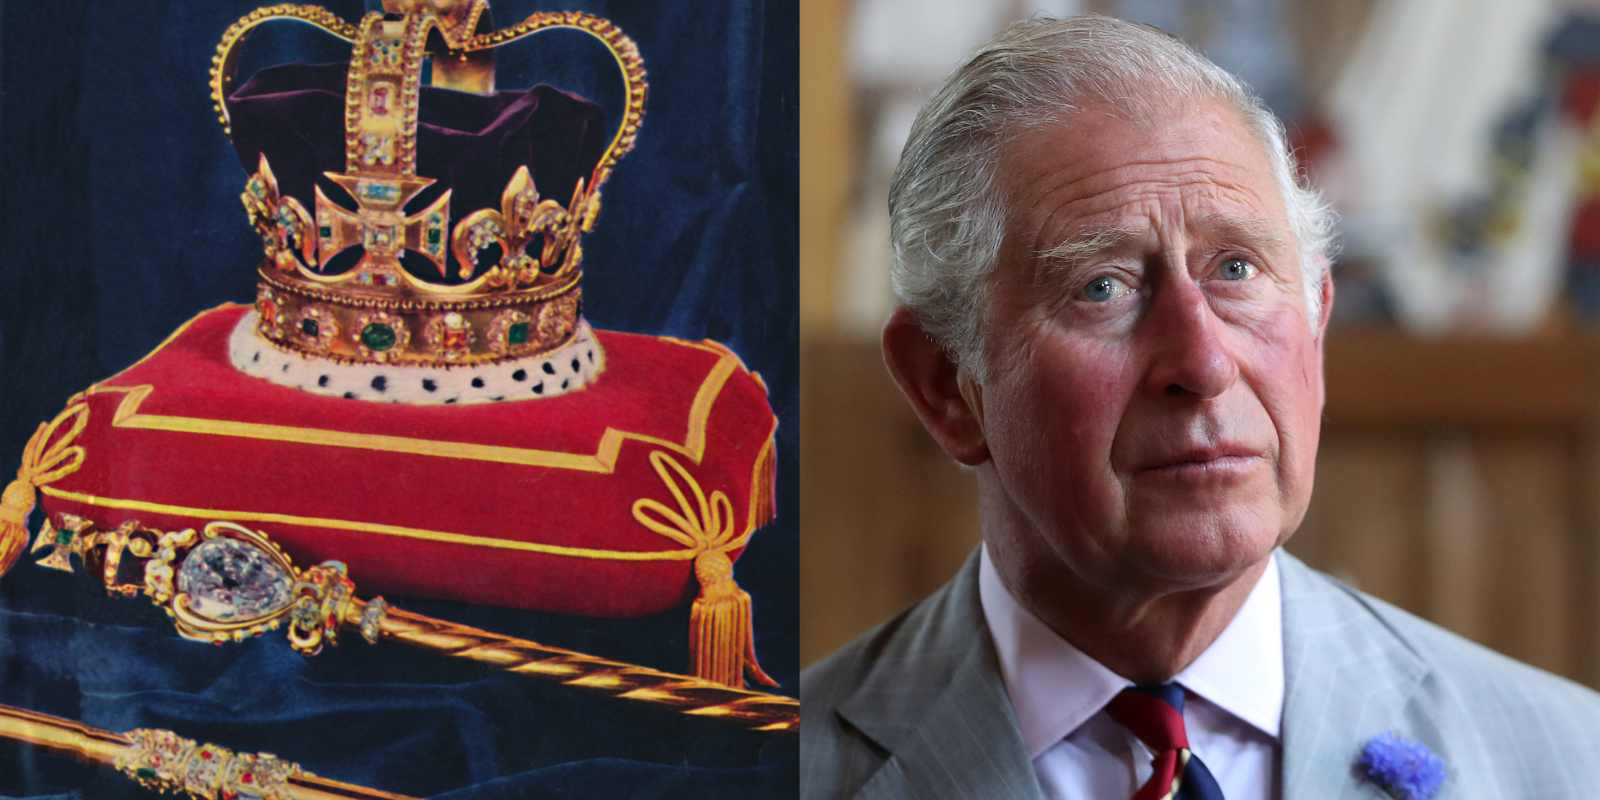 St Edwards Crown King Charles III 